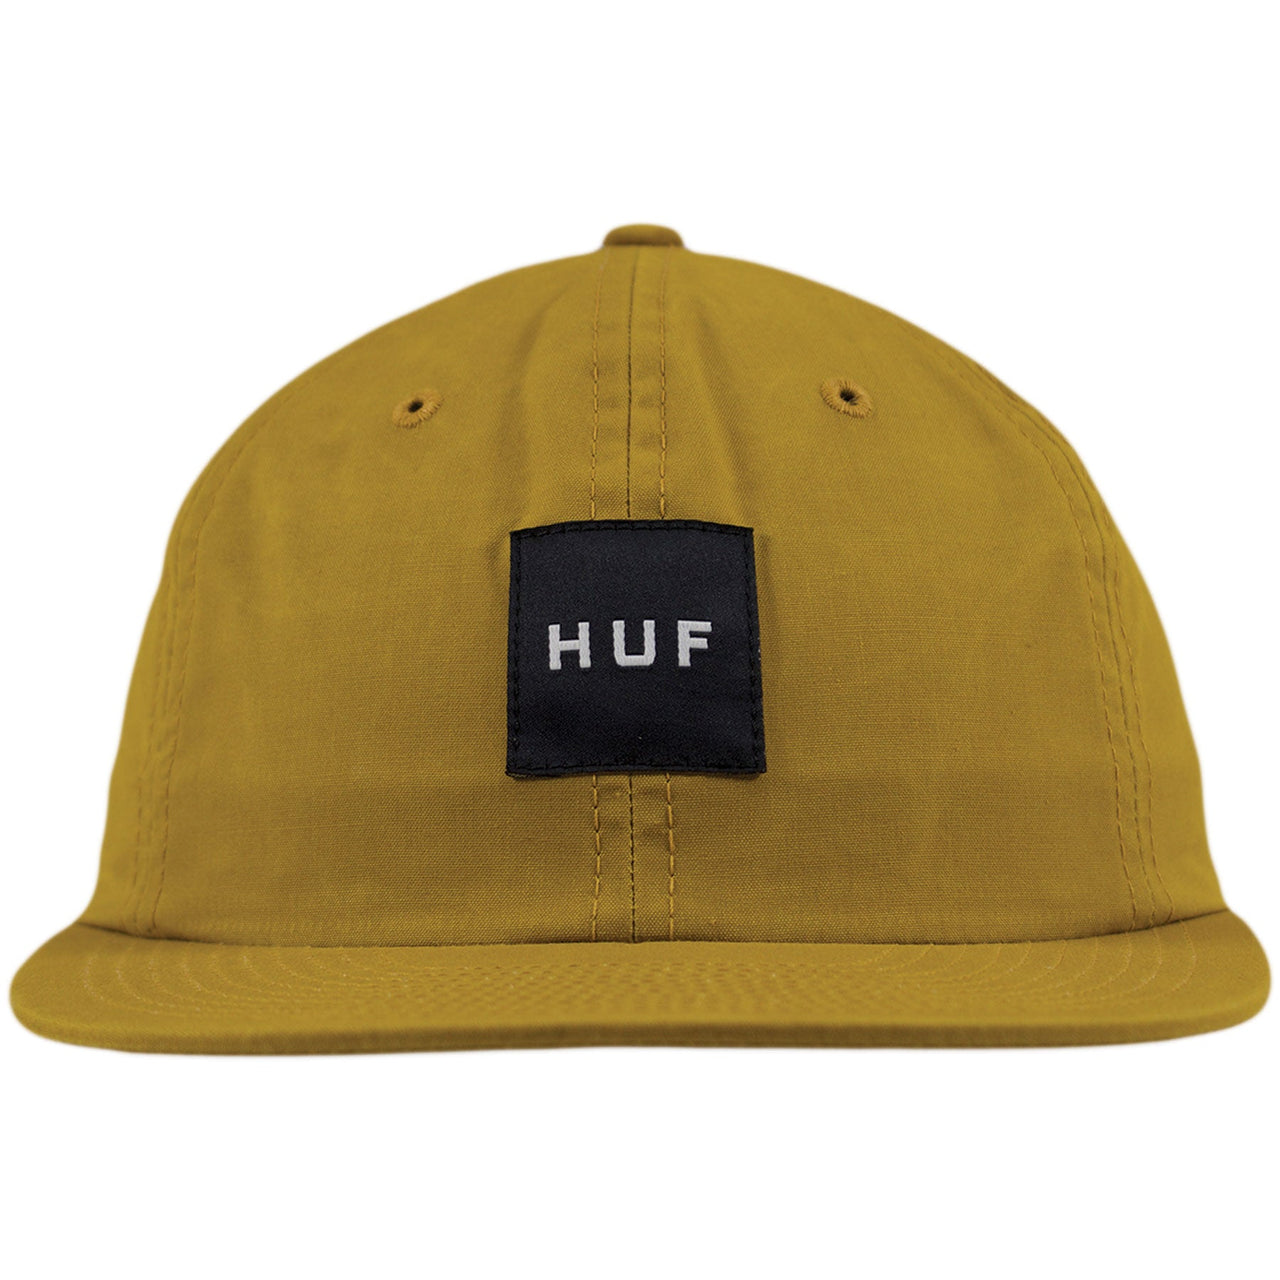 Huf Mustard Yellow British Millerain 6 Panel Leather Strapback Hat